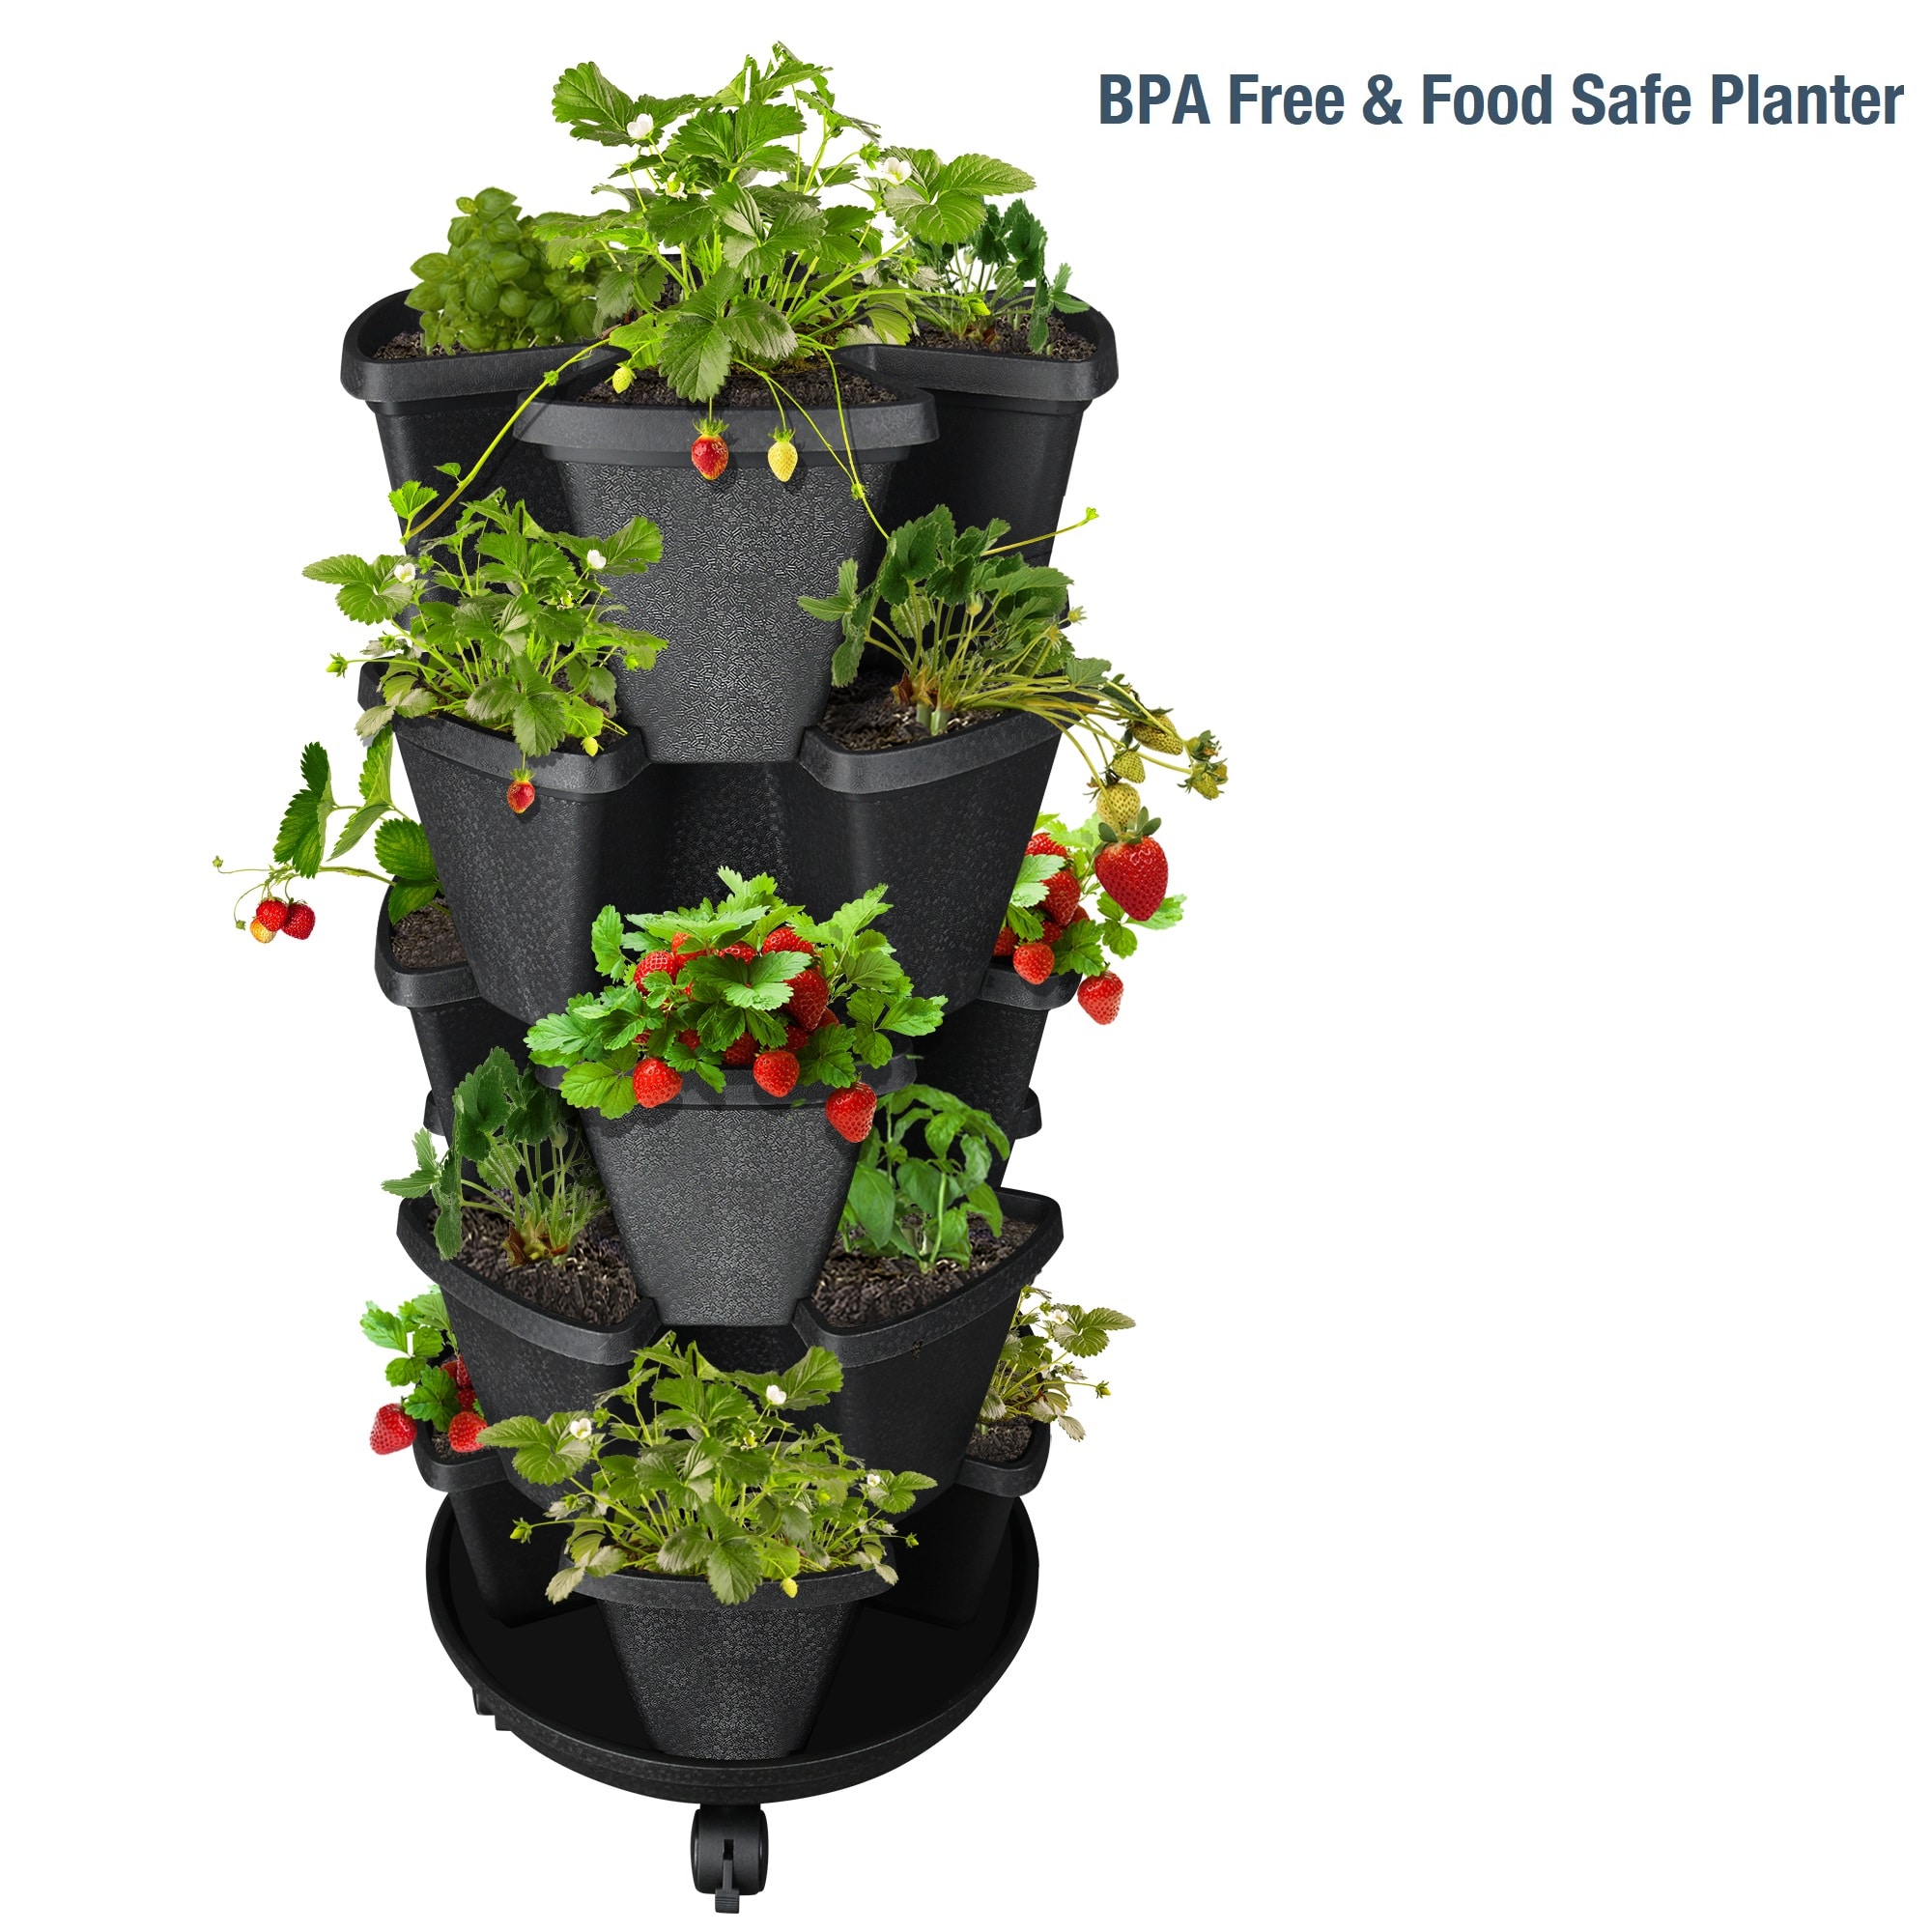 Culinary Herb Garden Starter Kit - Black Hangable / Stackable Garden Planter